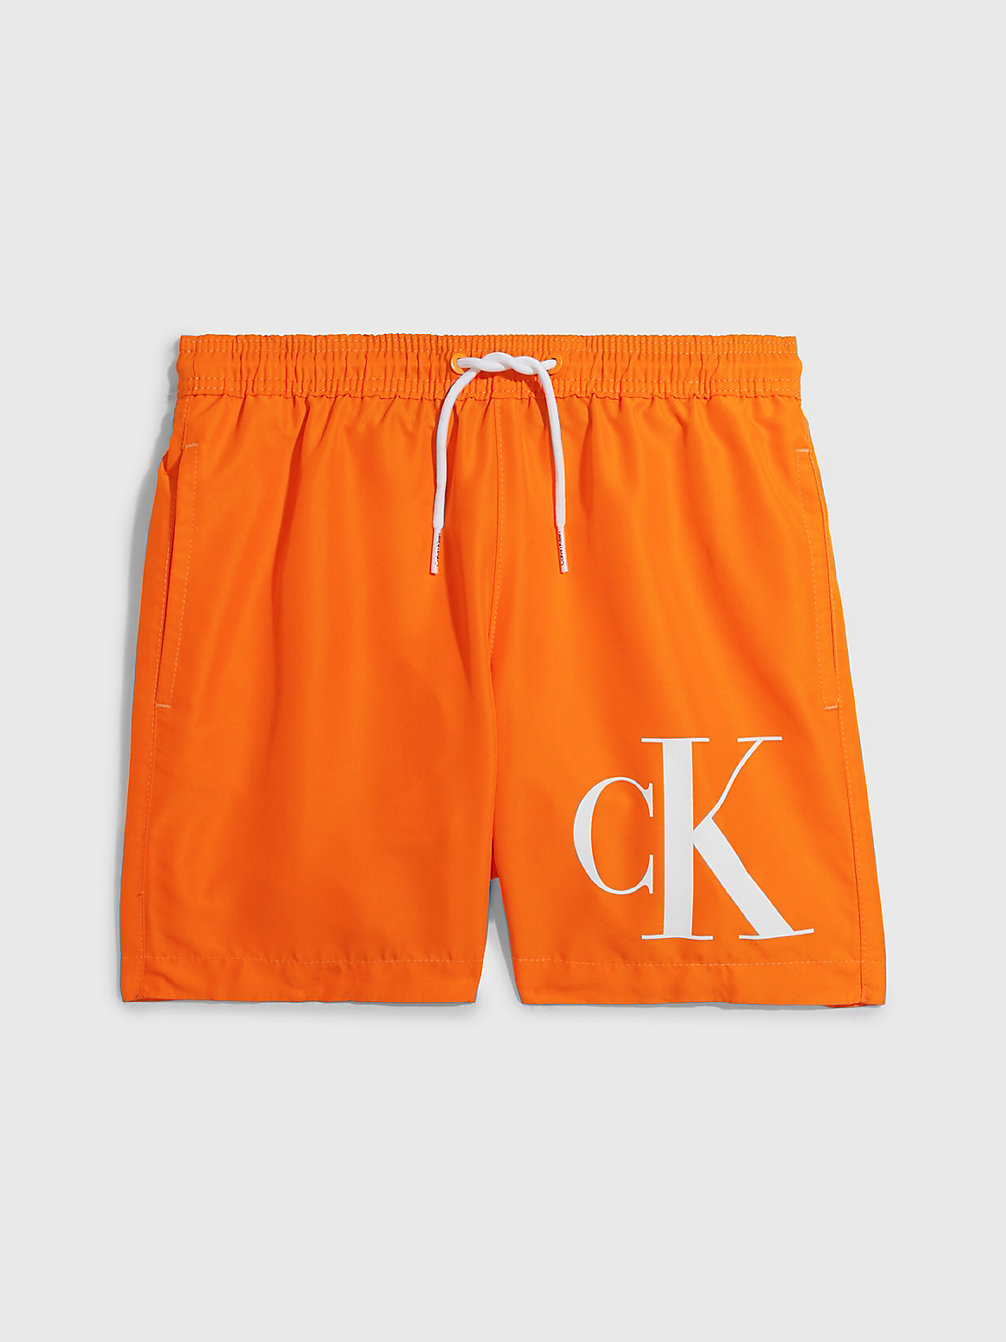 SUN KISSED ORANGE > Jongenszwemshorts - CK Monogram > undefined boys - Calvin Klein